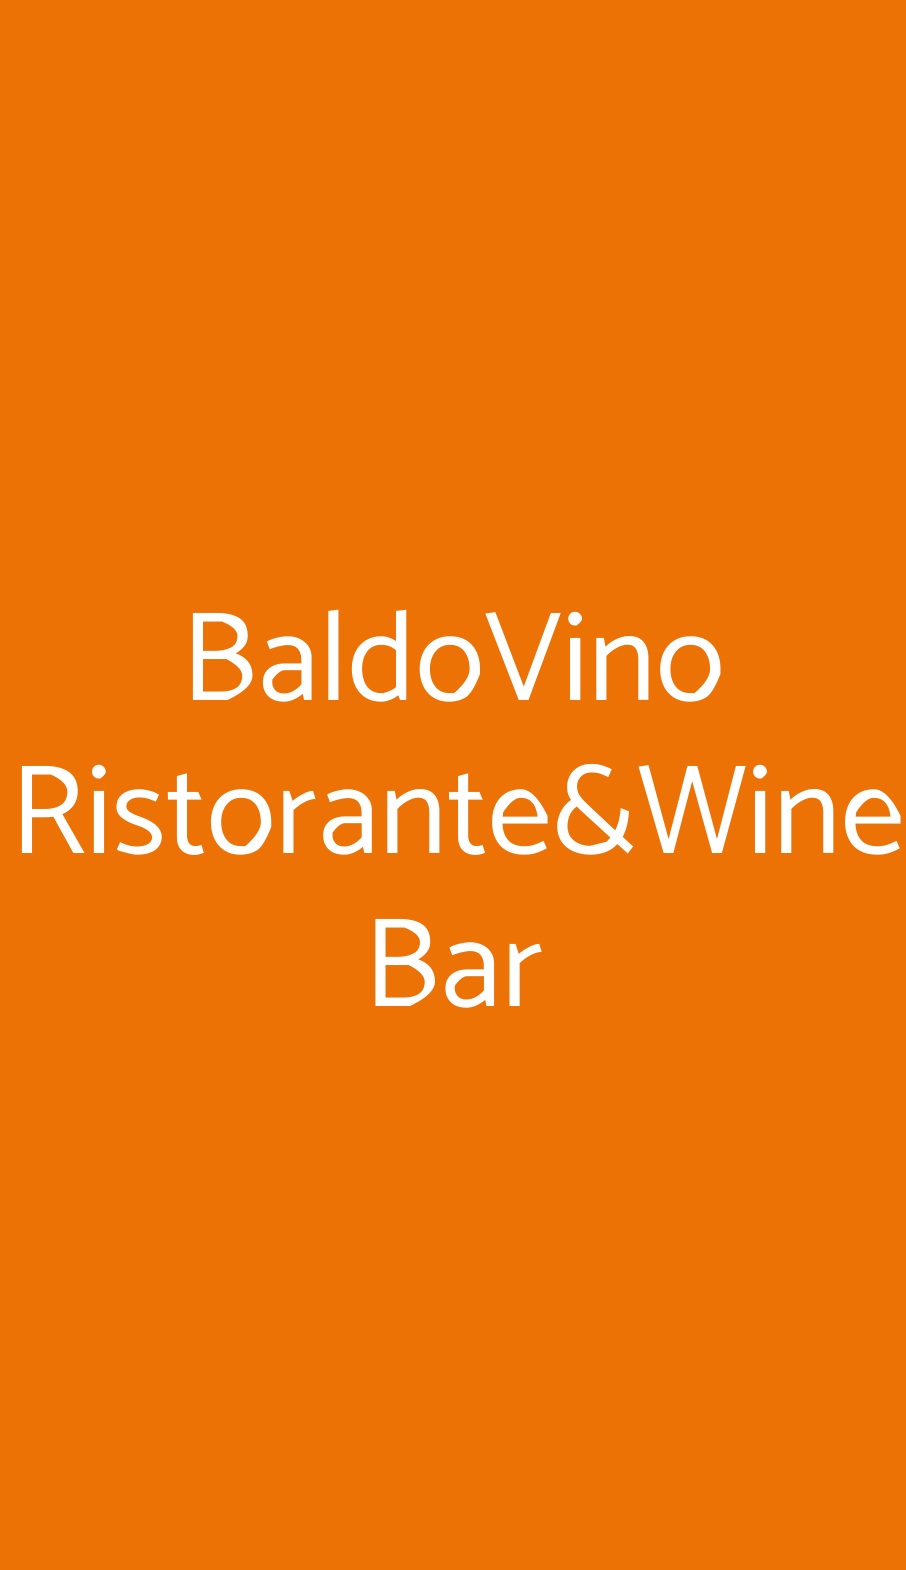 BaldoVino Ristorante&Wine Bar Roma menù 1 pagina